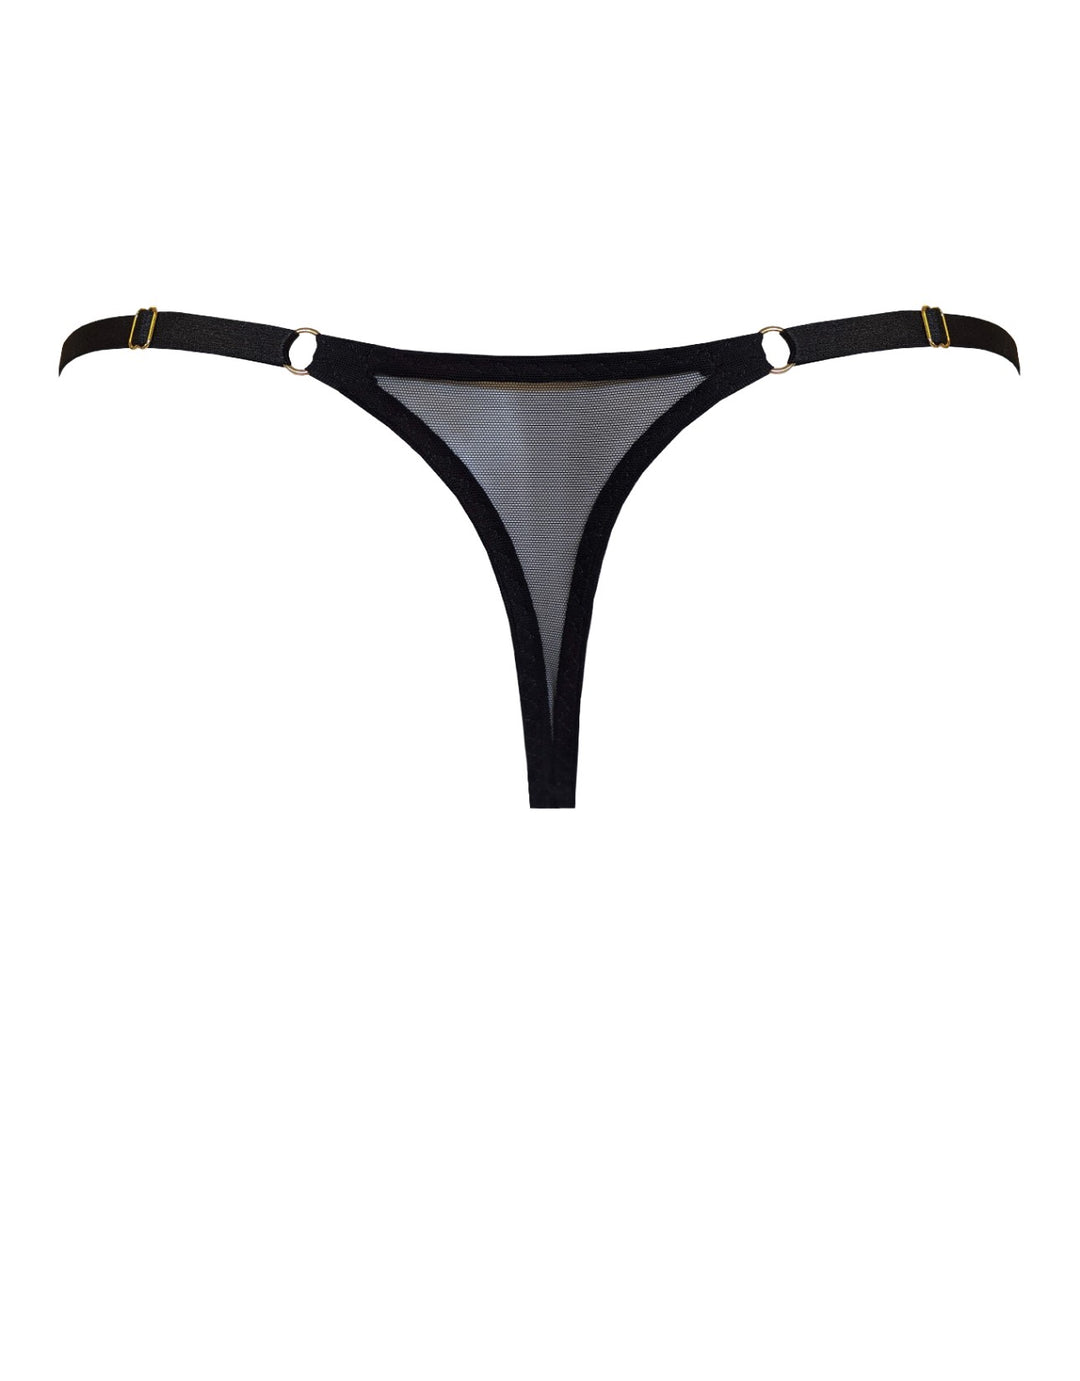 bordelle-lingerie-aurea-thong-in-black